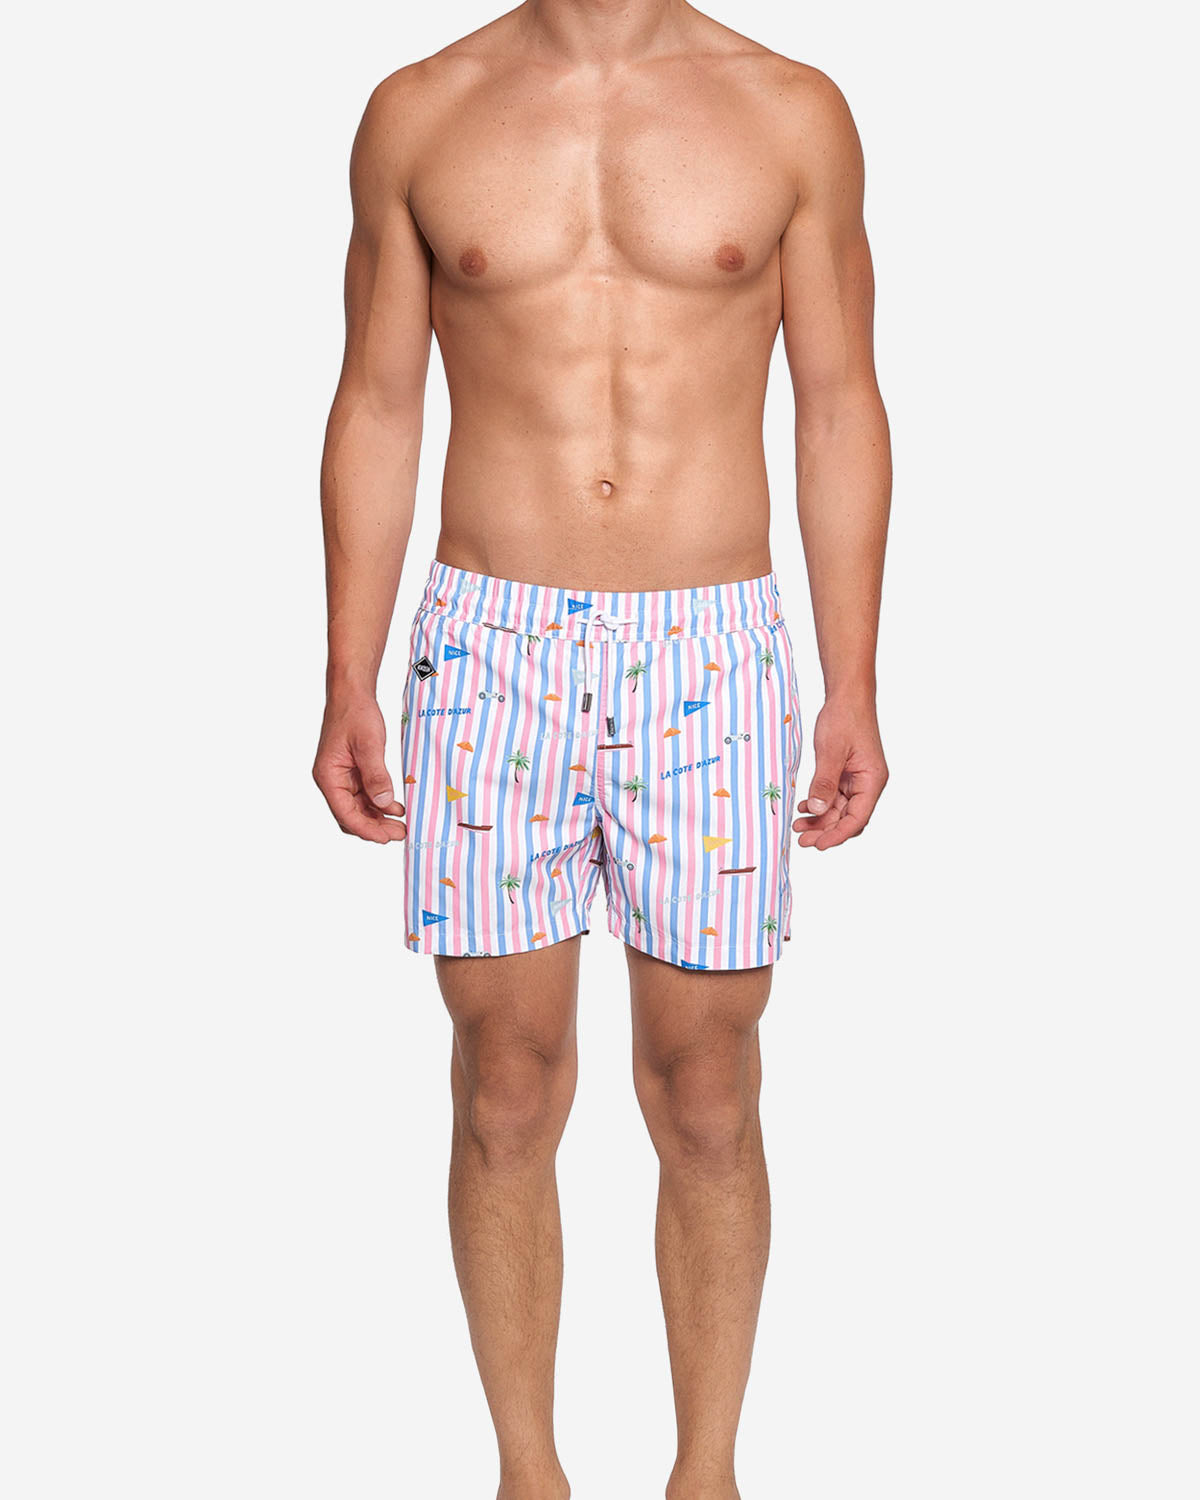 Model wearing striped printed mid length swim trunks